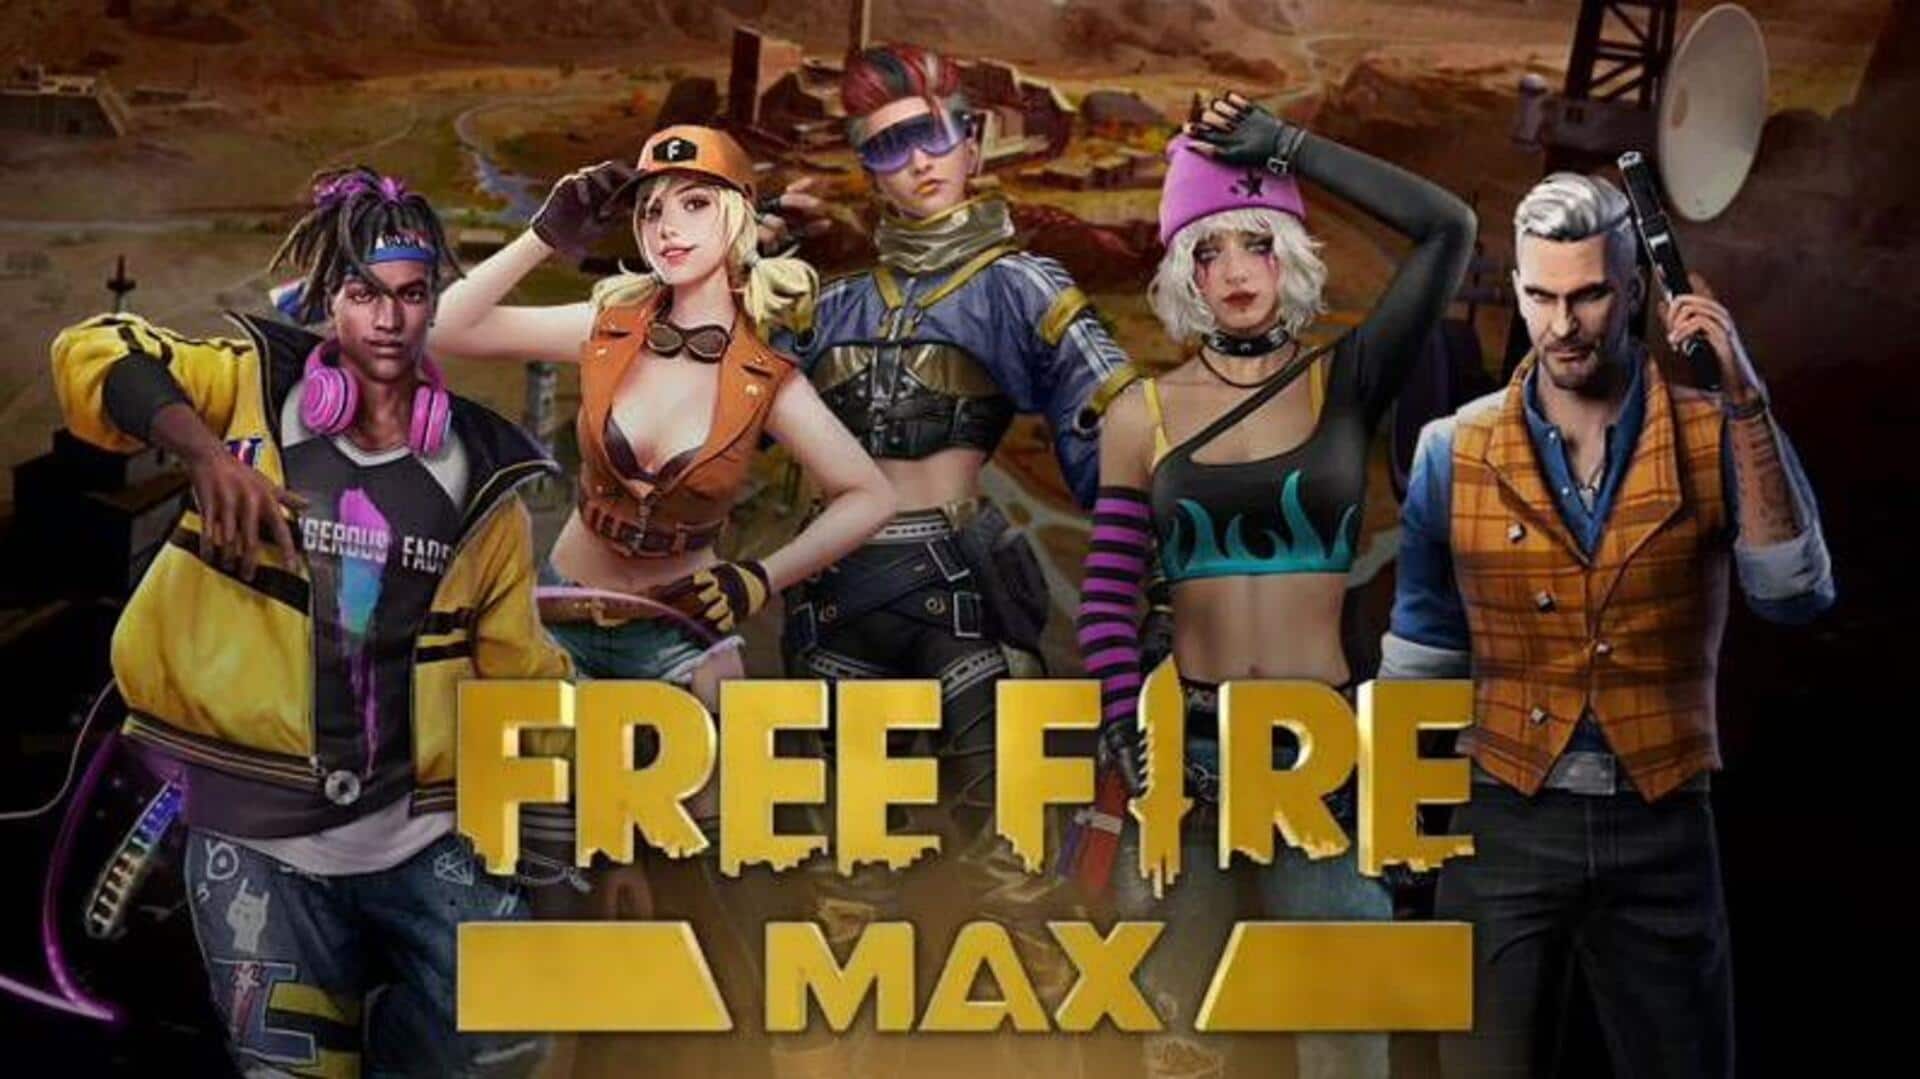 Garena Free Fire Max July 23 Redeem Codes